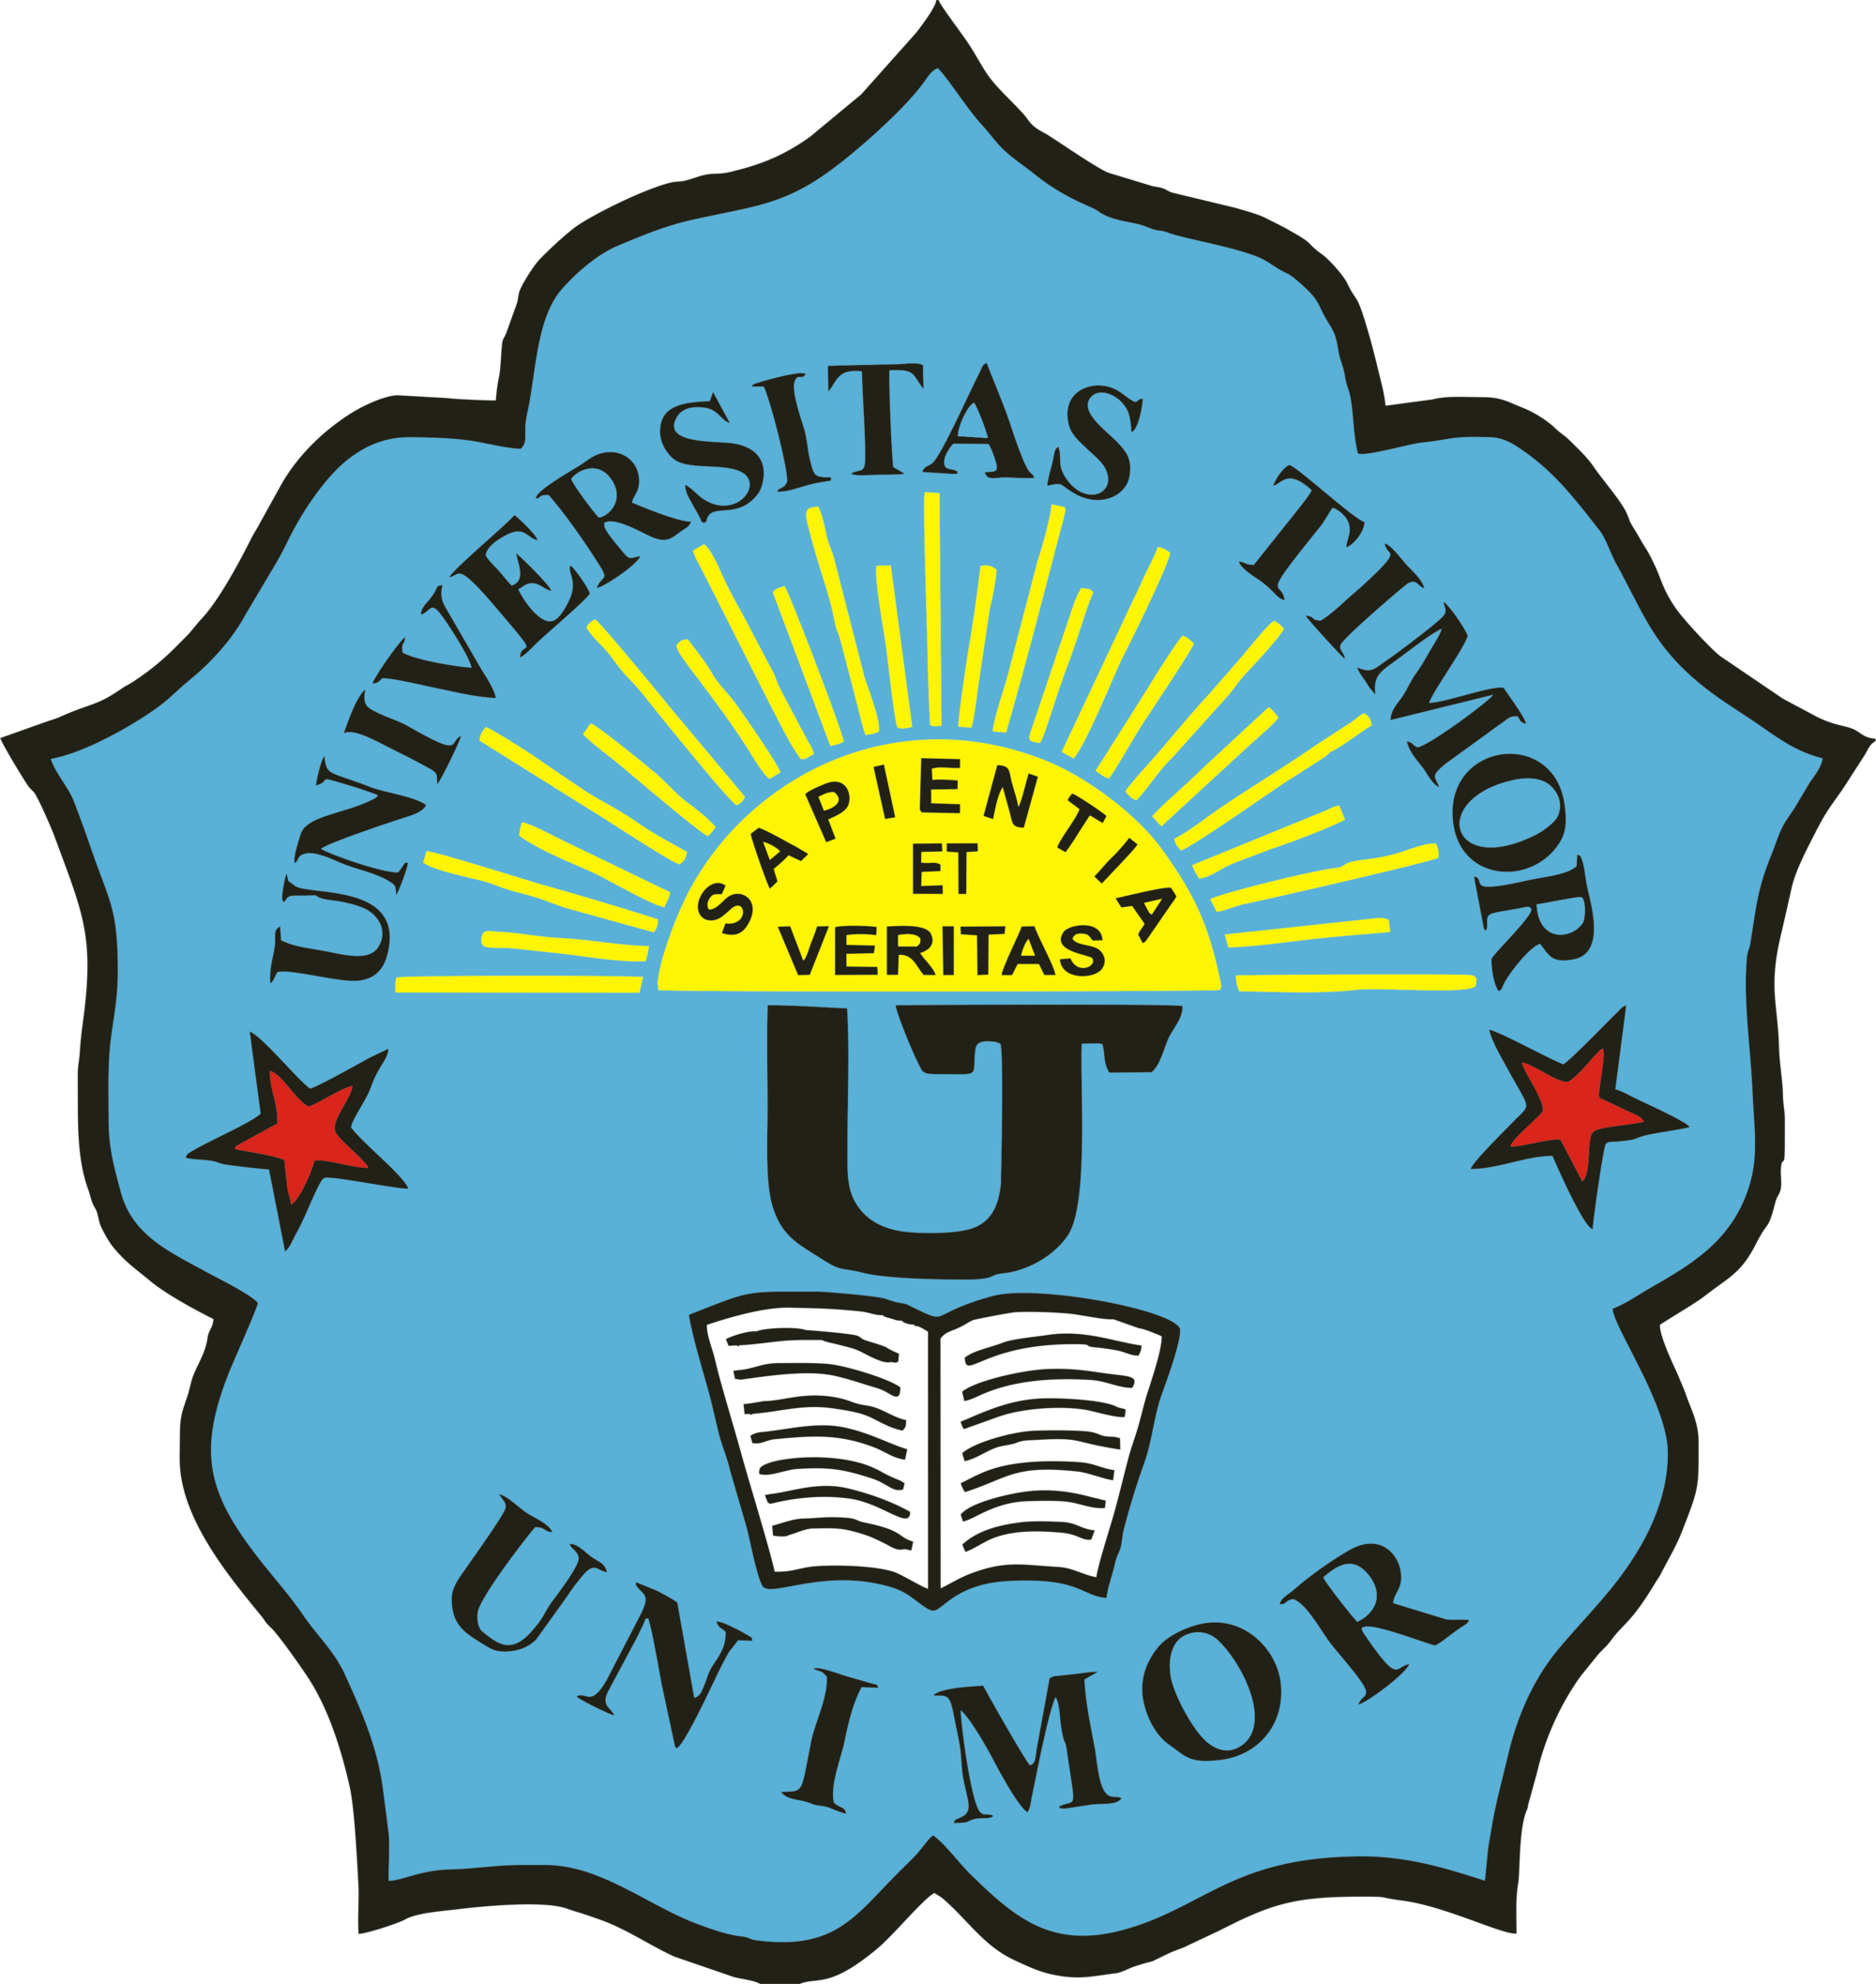 Universitas Timor